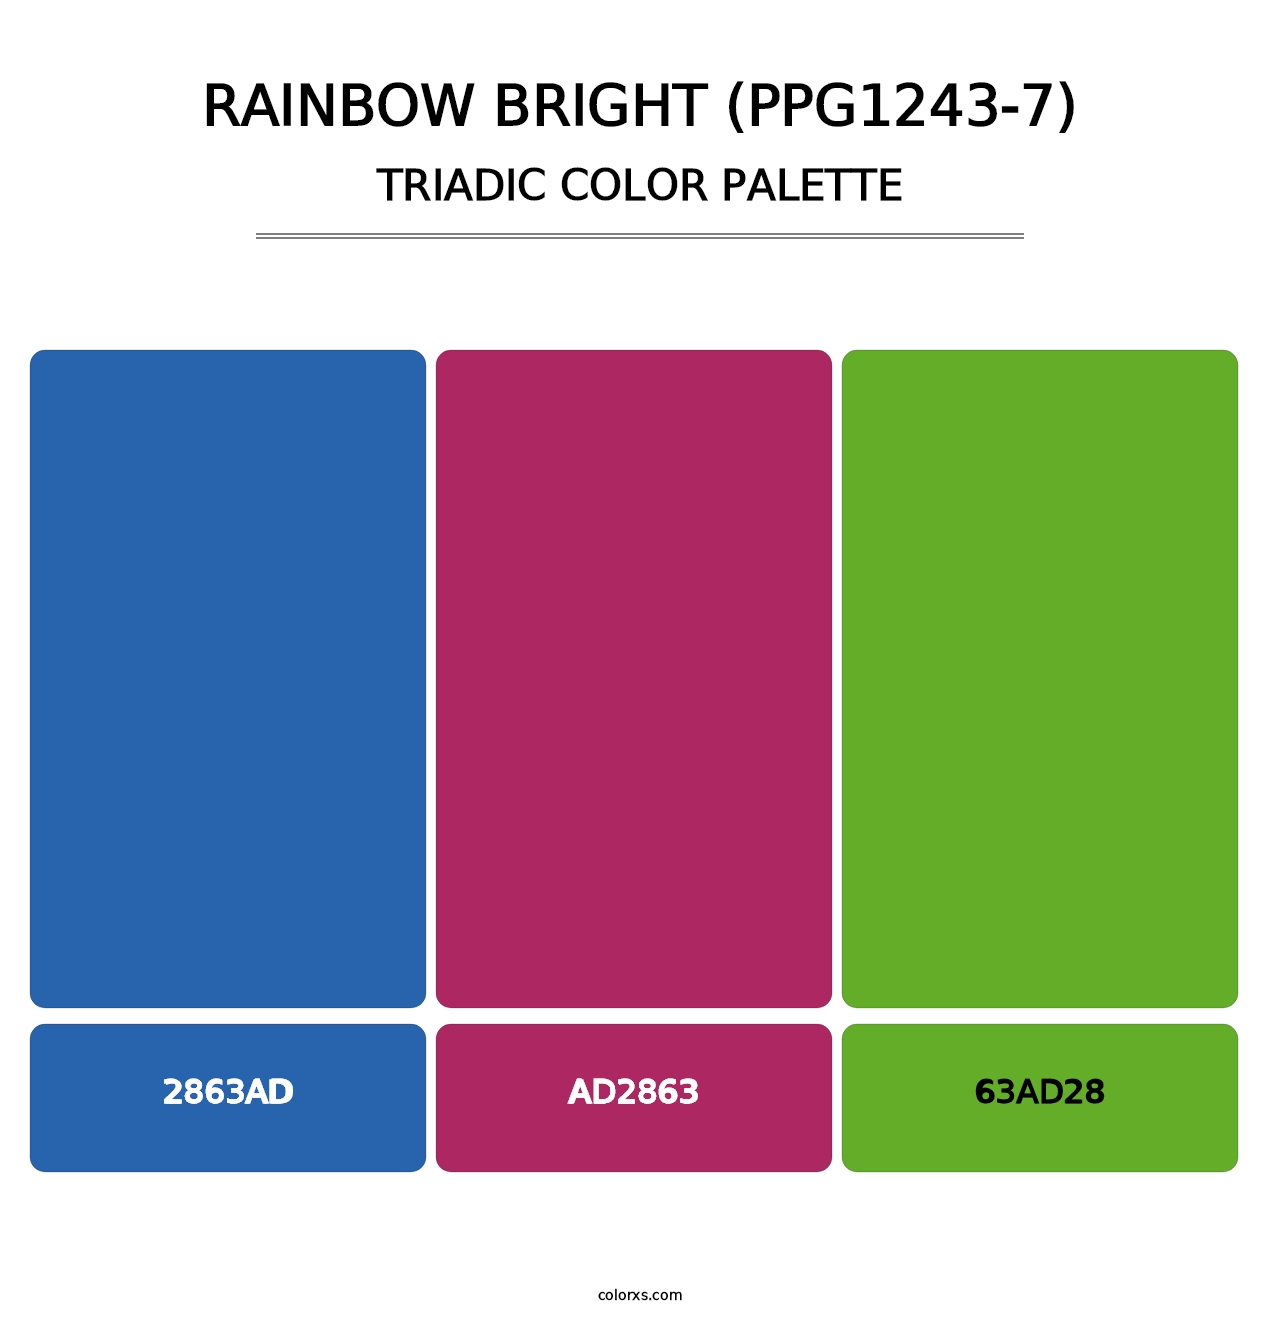 Rainbow Bright (PPG1243-7) - Triadic Color Palette